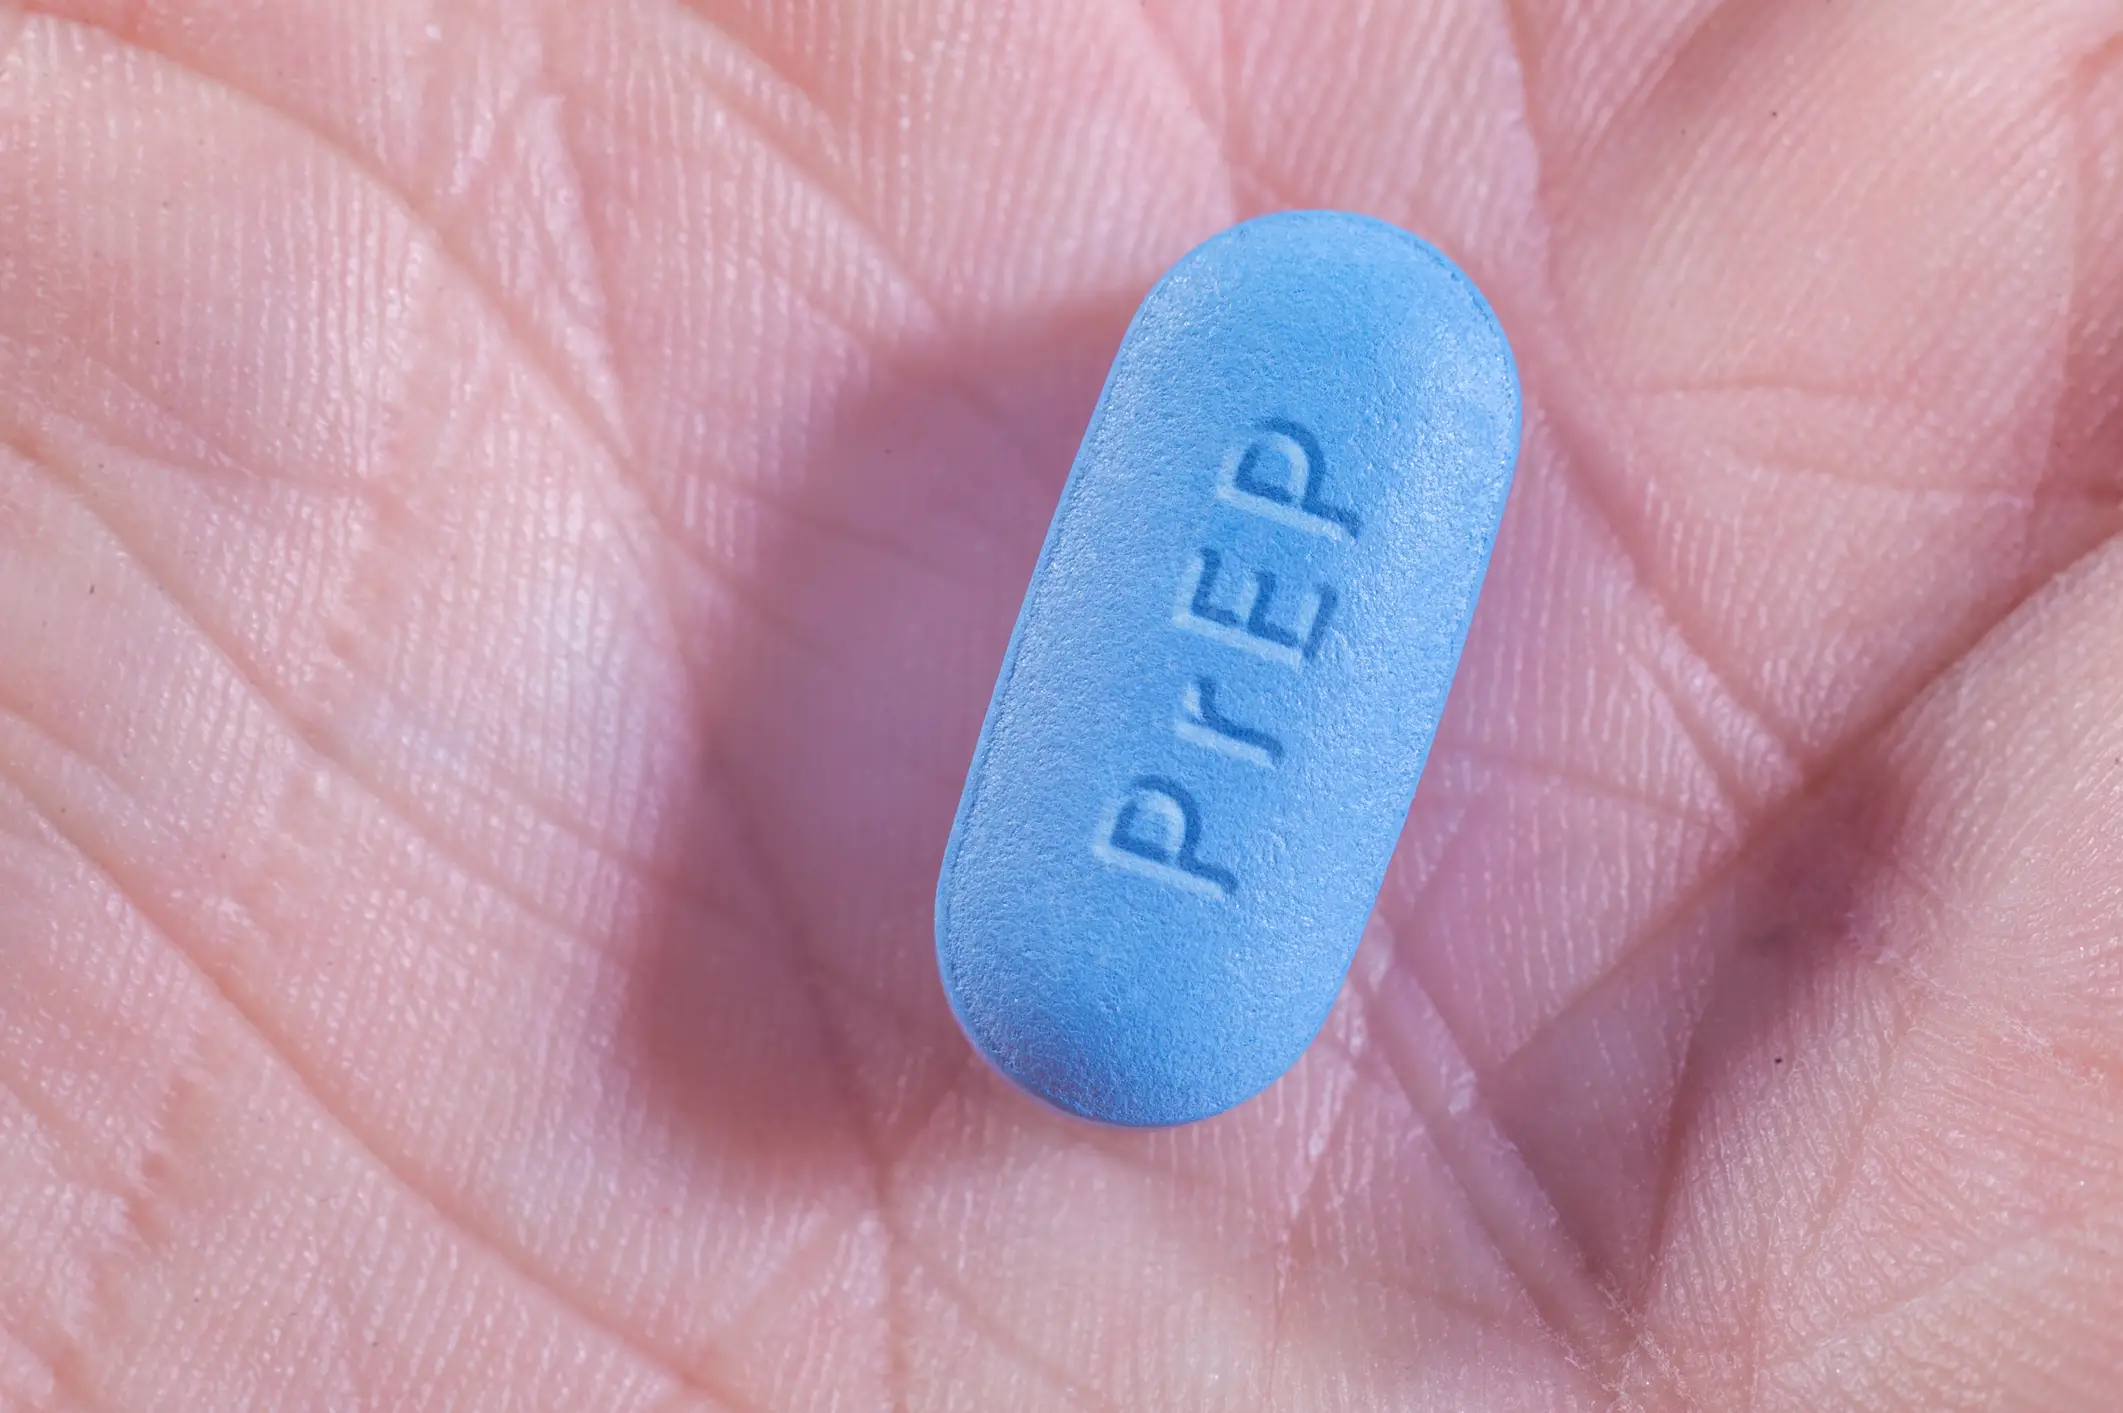 how to get pep pills in nairobi